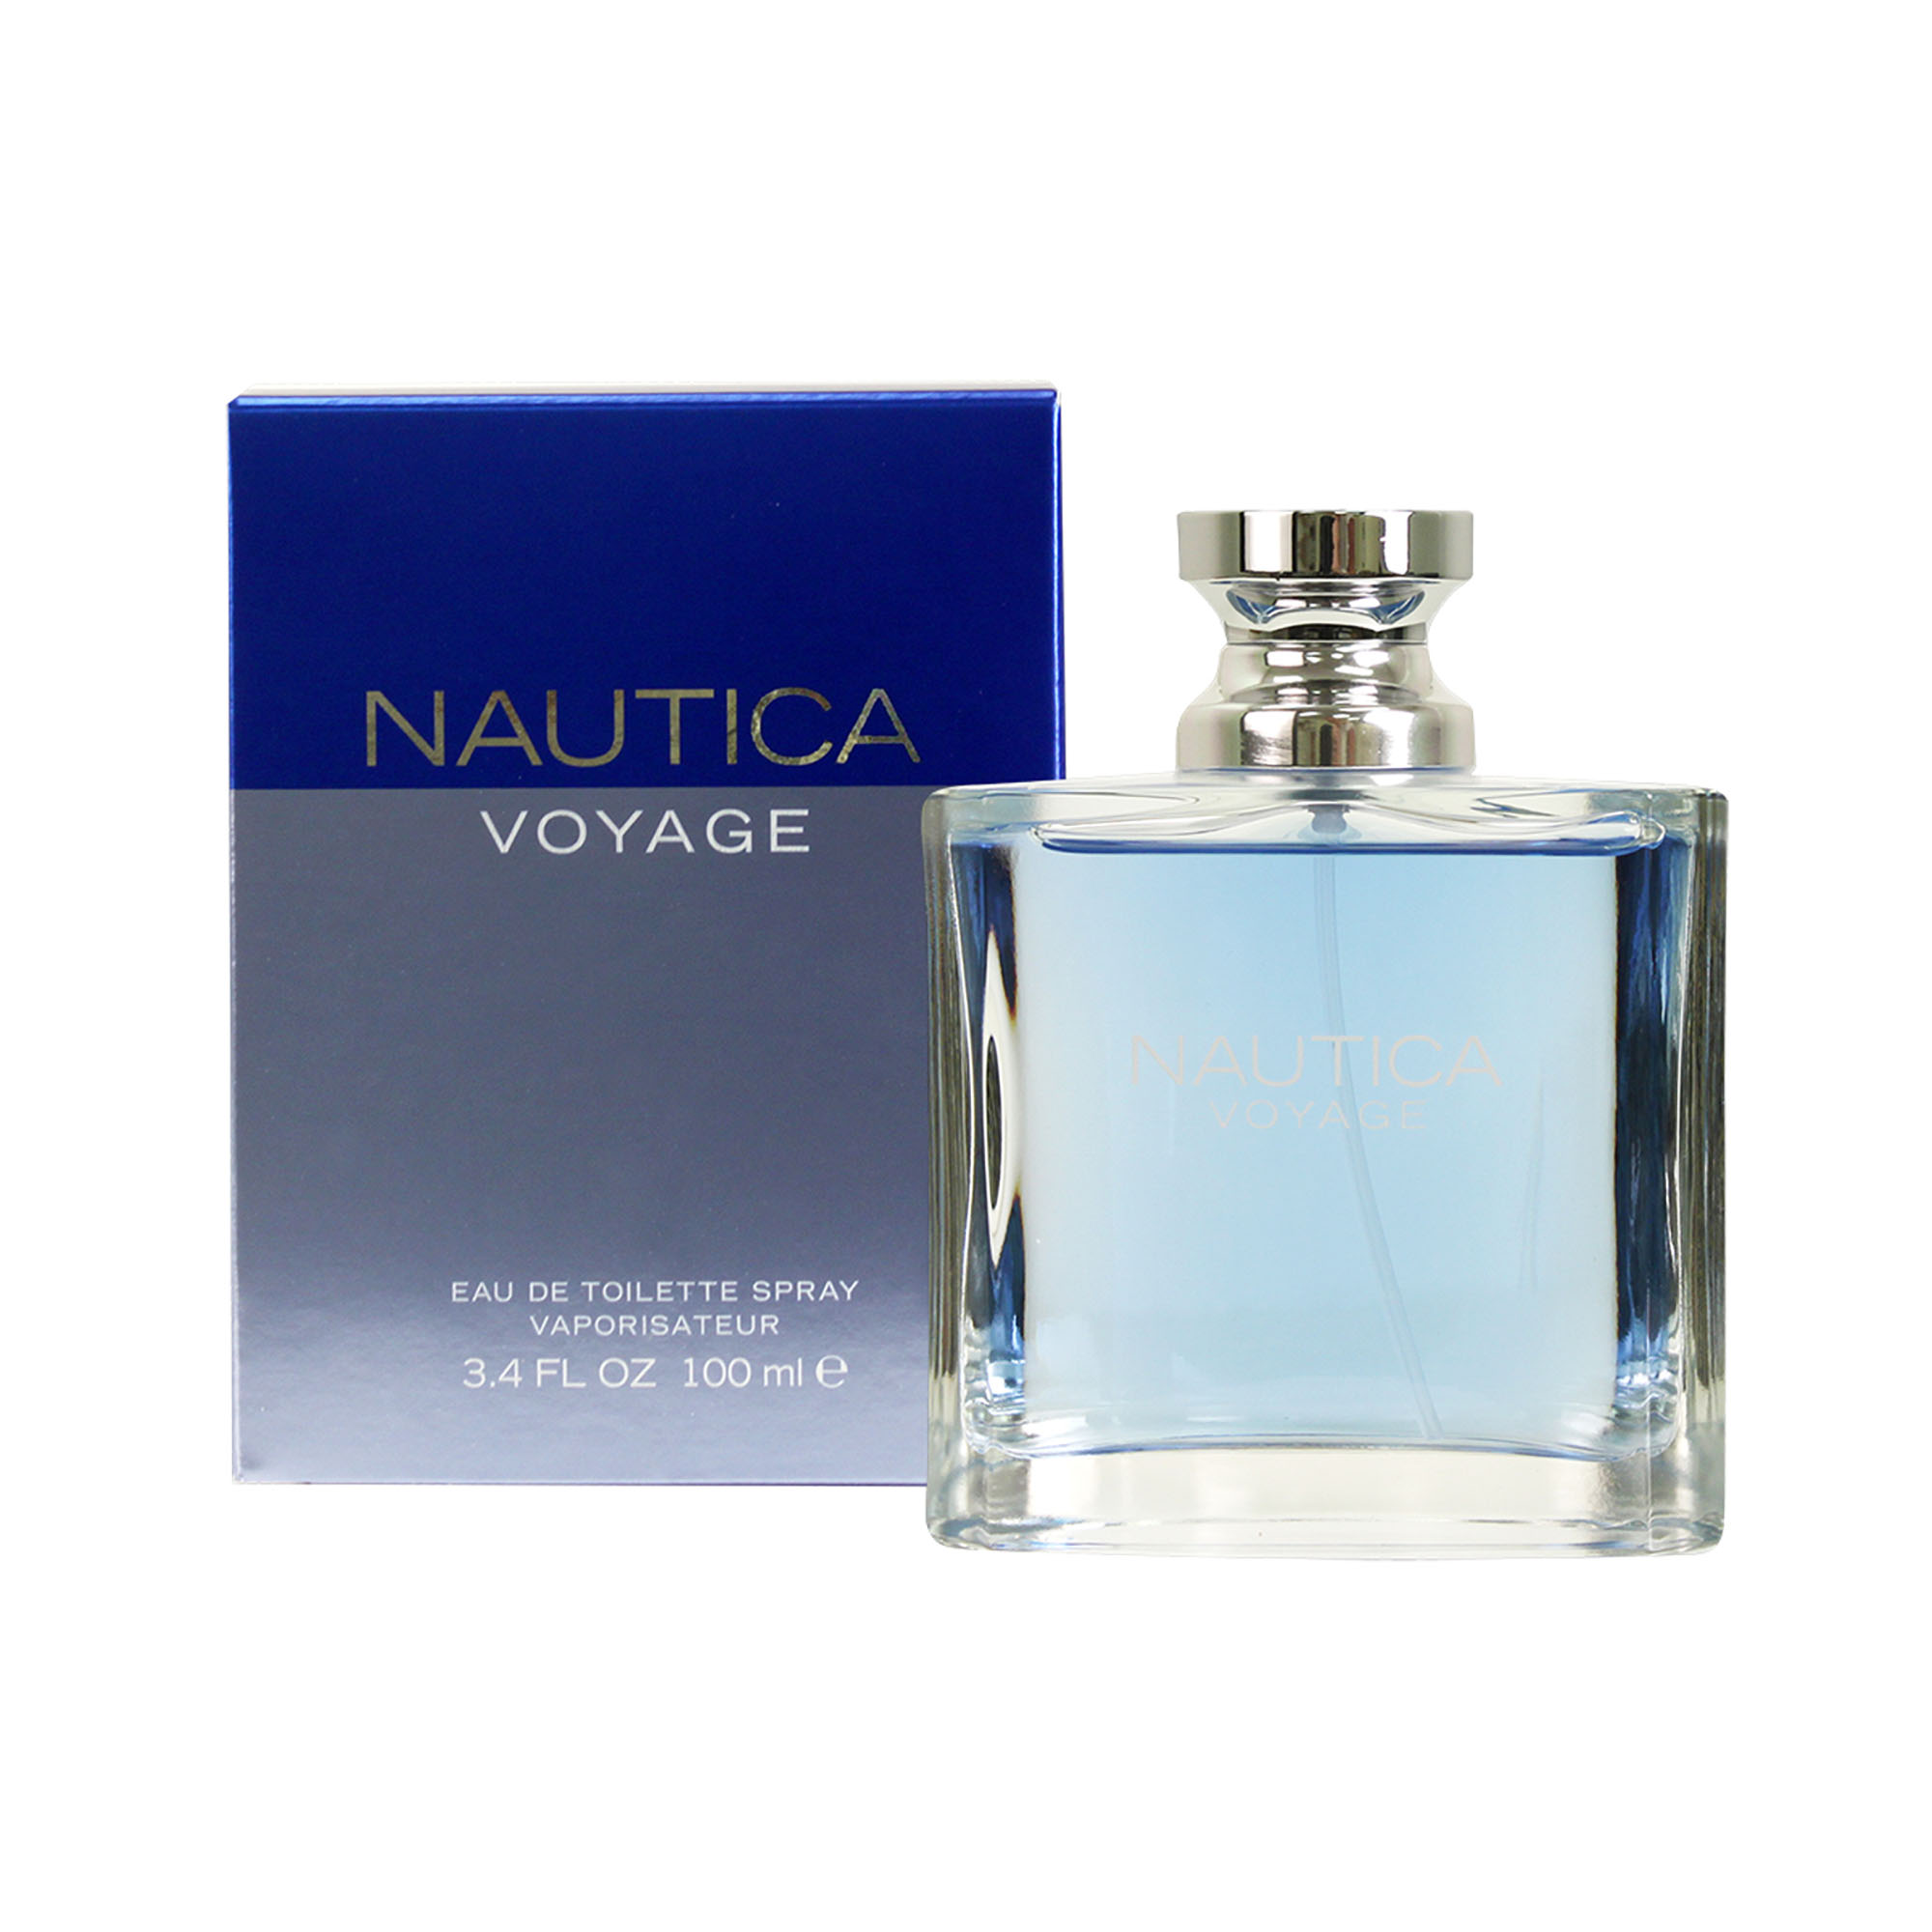 Nautica Voyage by Nautica Eau De Toilette, Cologne and Fragrance For Men 100 ml - image 1 of 3